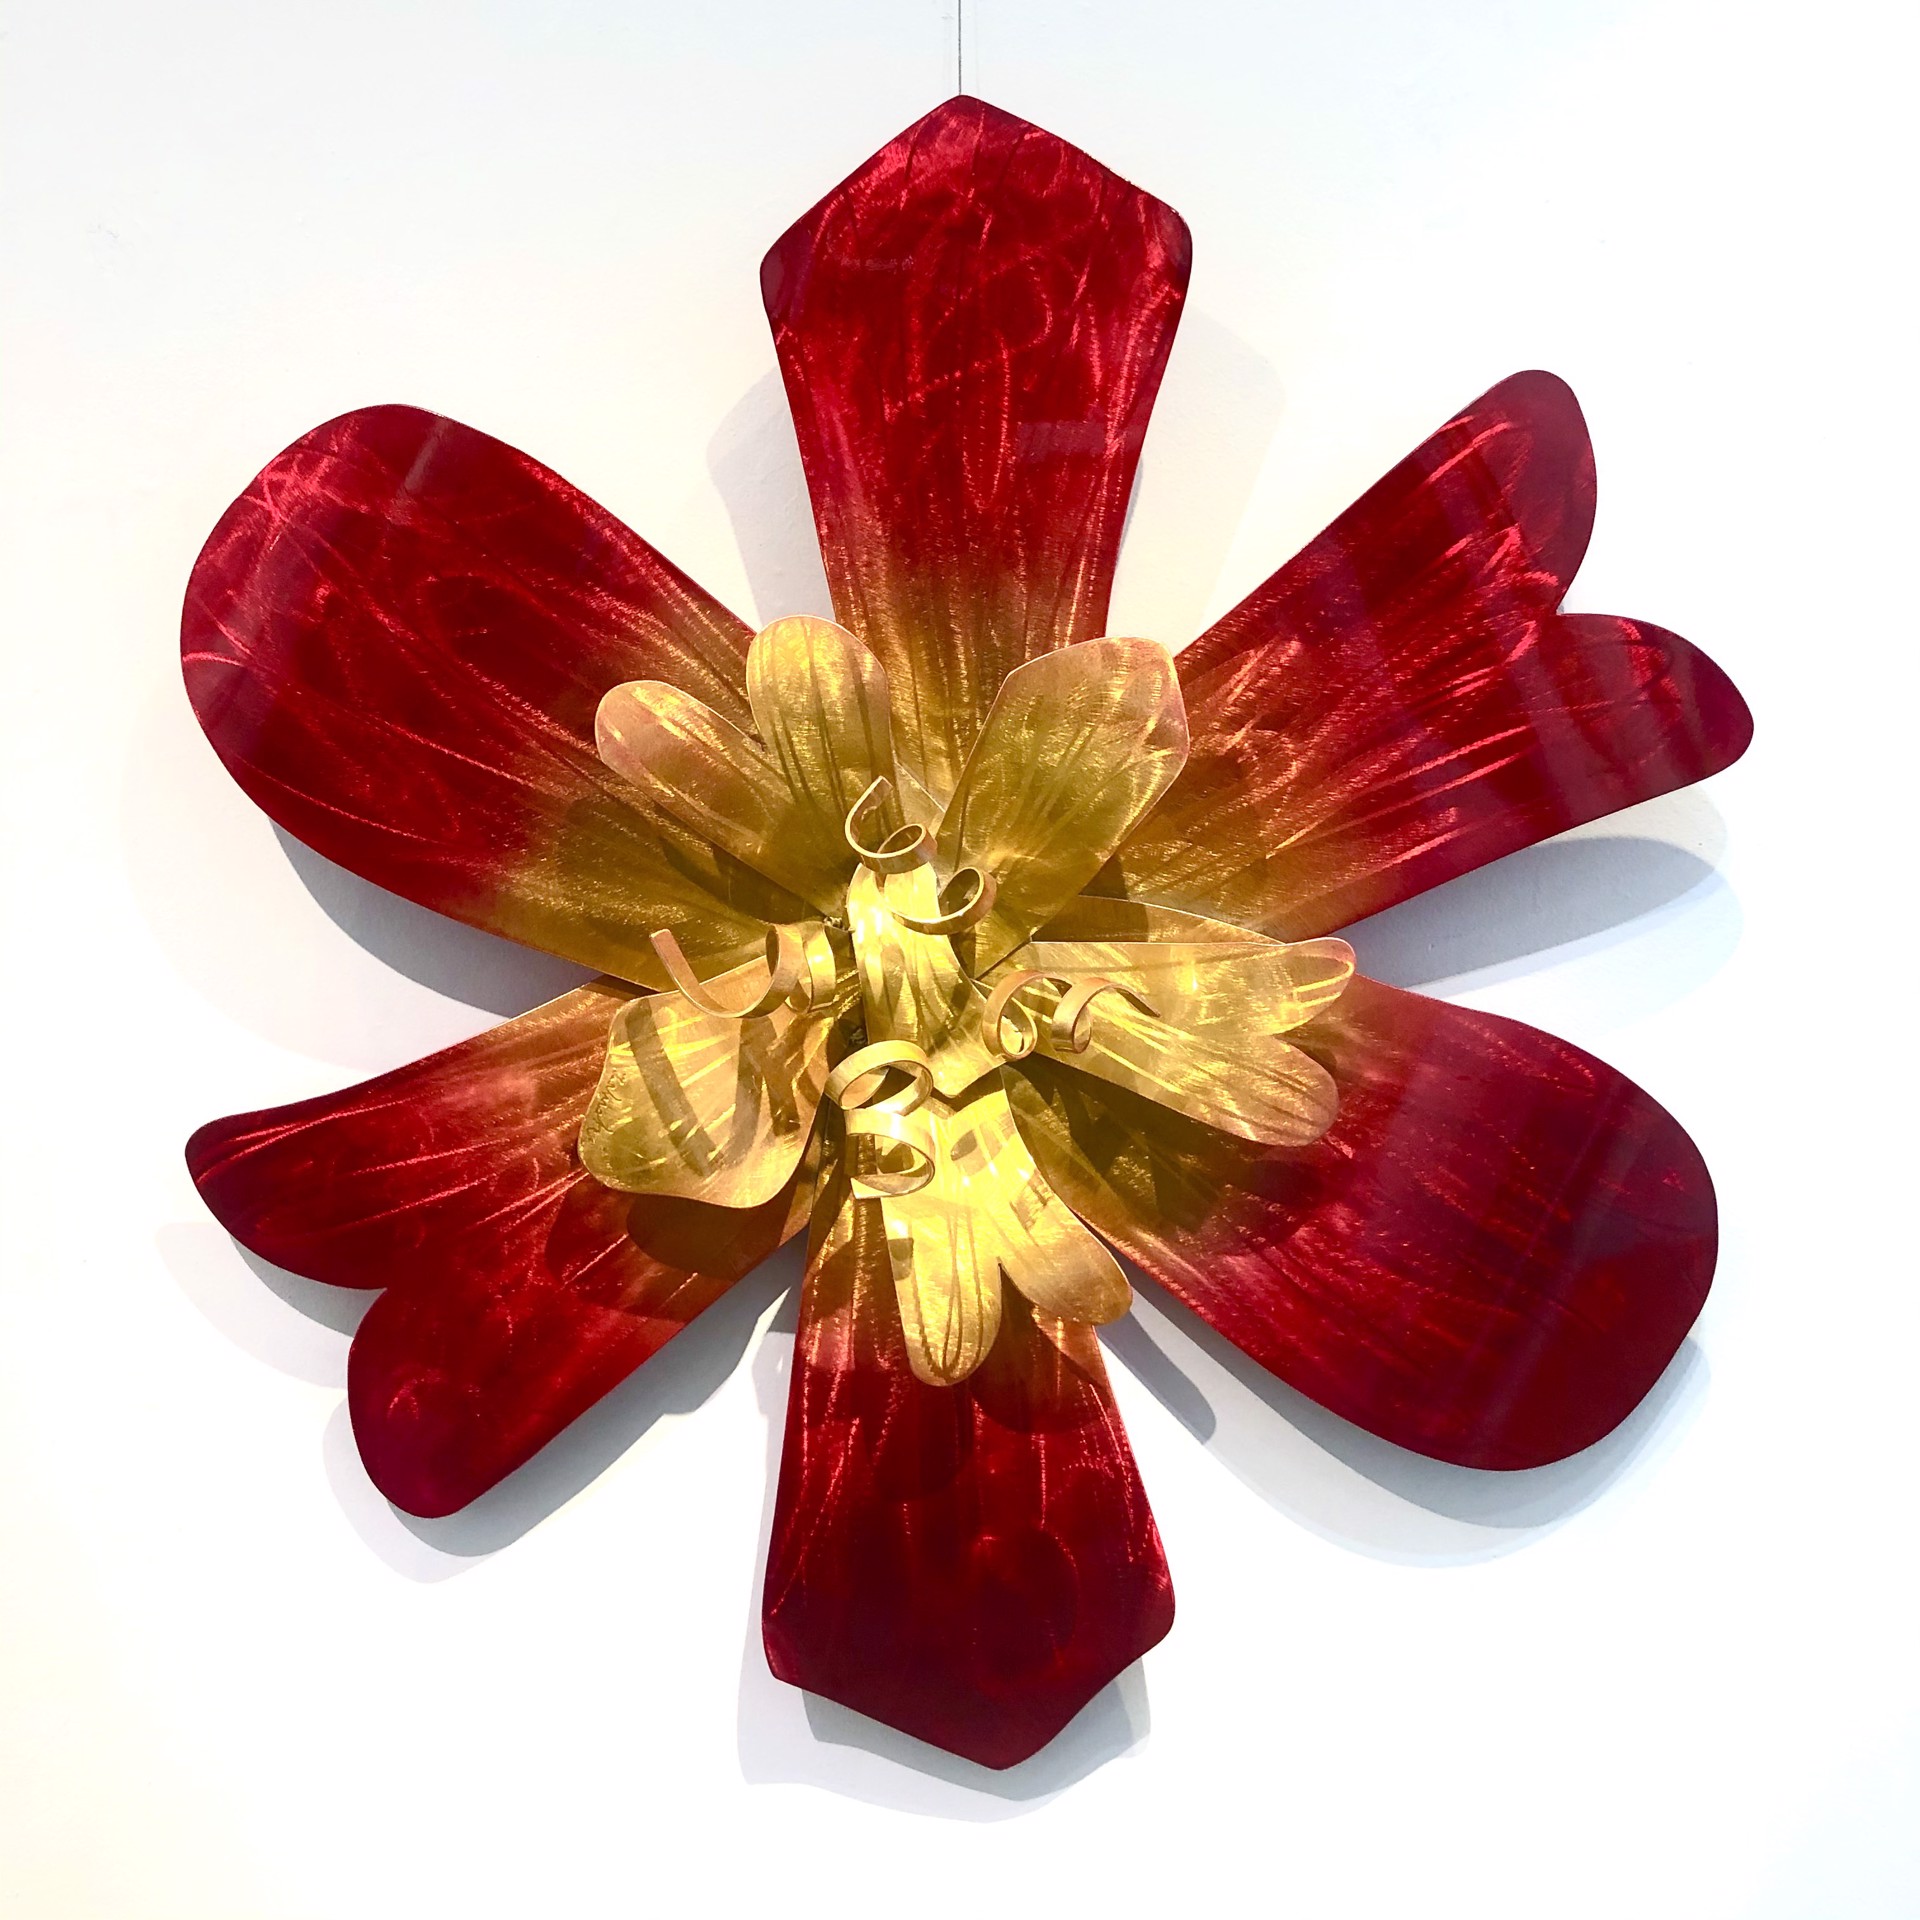 Red Power Flower by Steve Zaluski